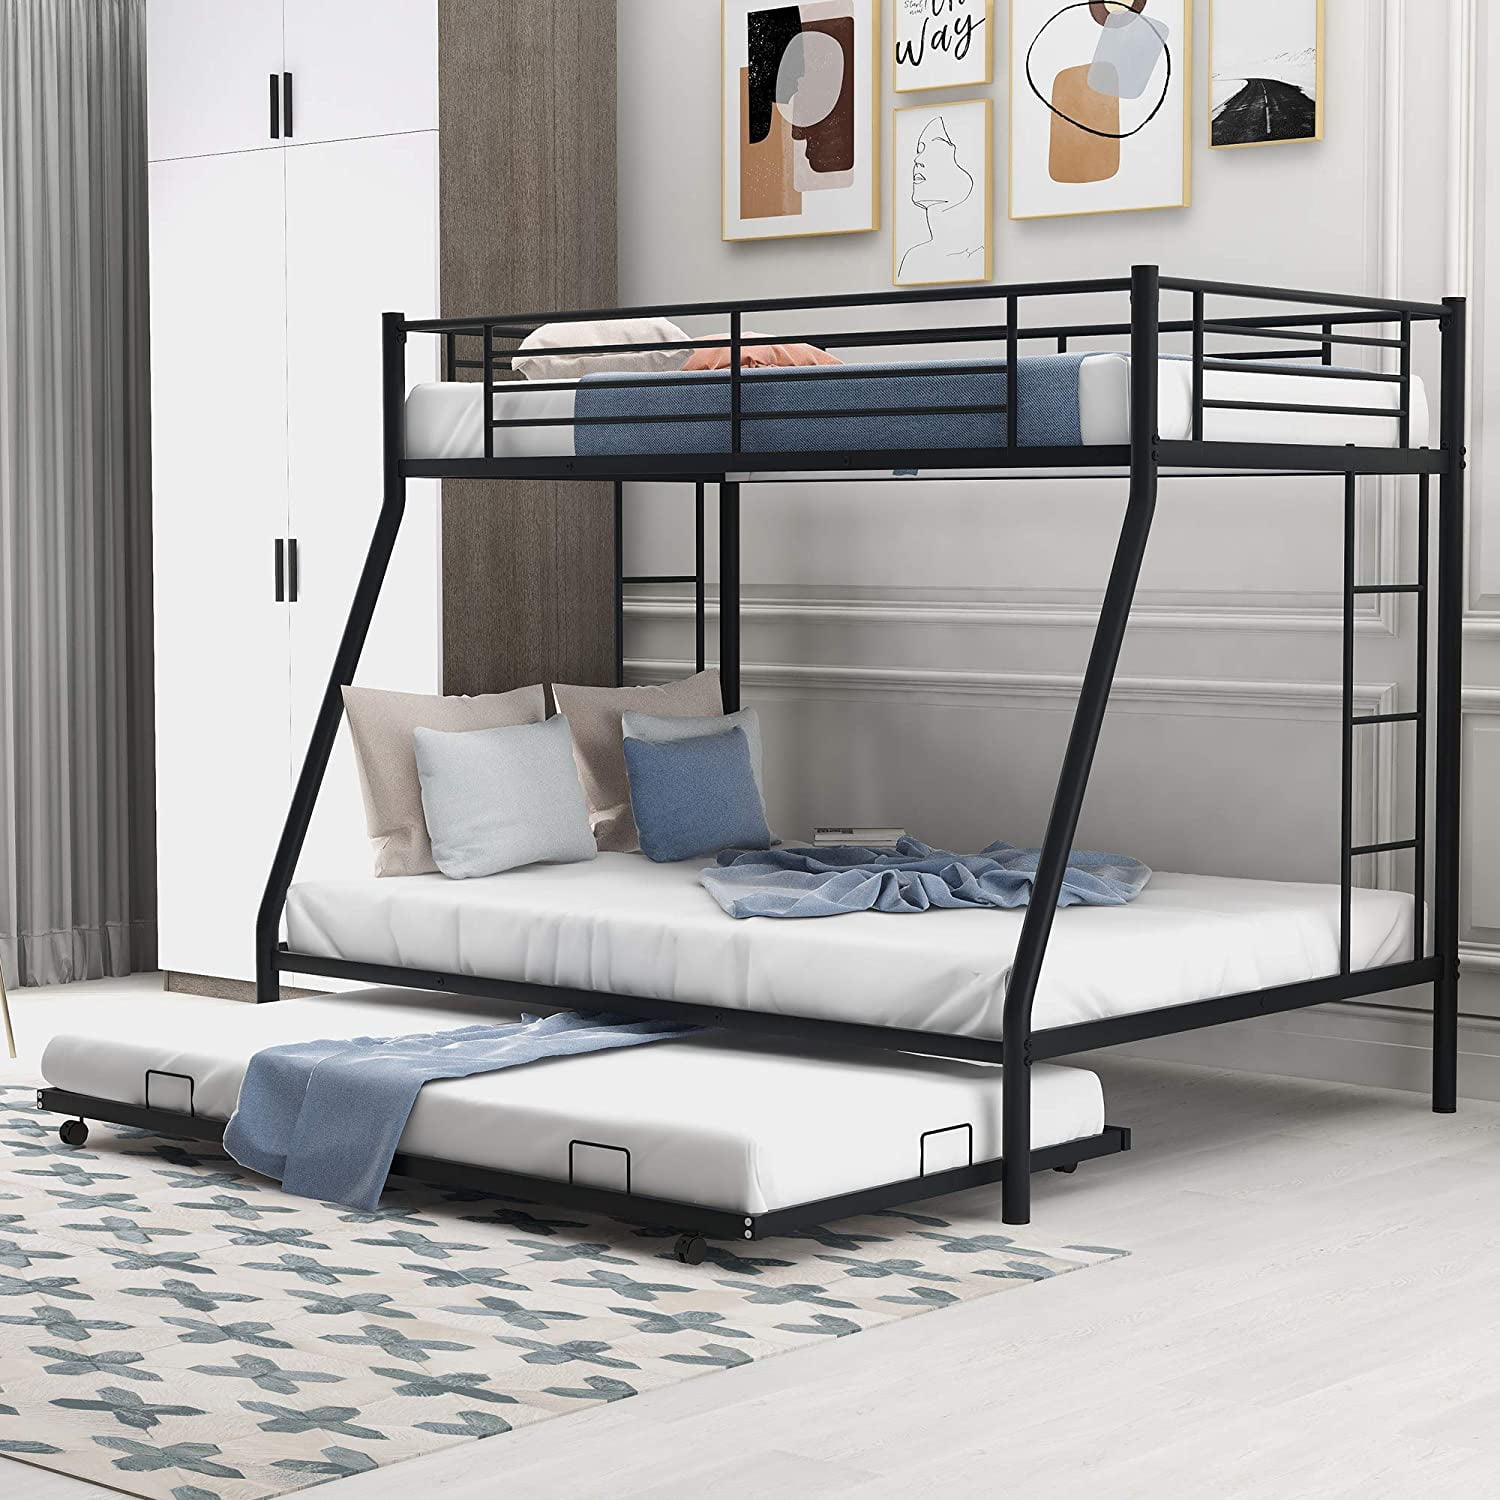 Piscis Metal Bunk Bed With Trundle, Metal Bunk Bed Rails